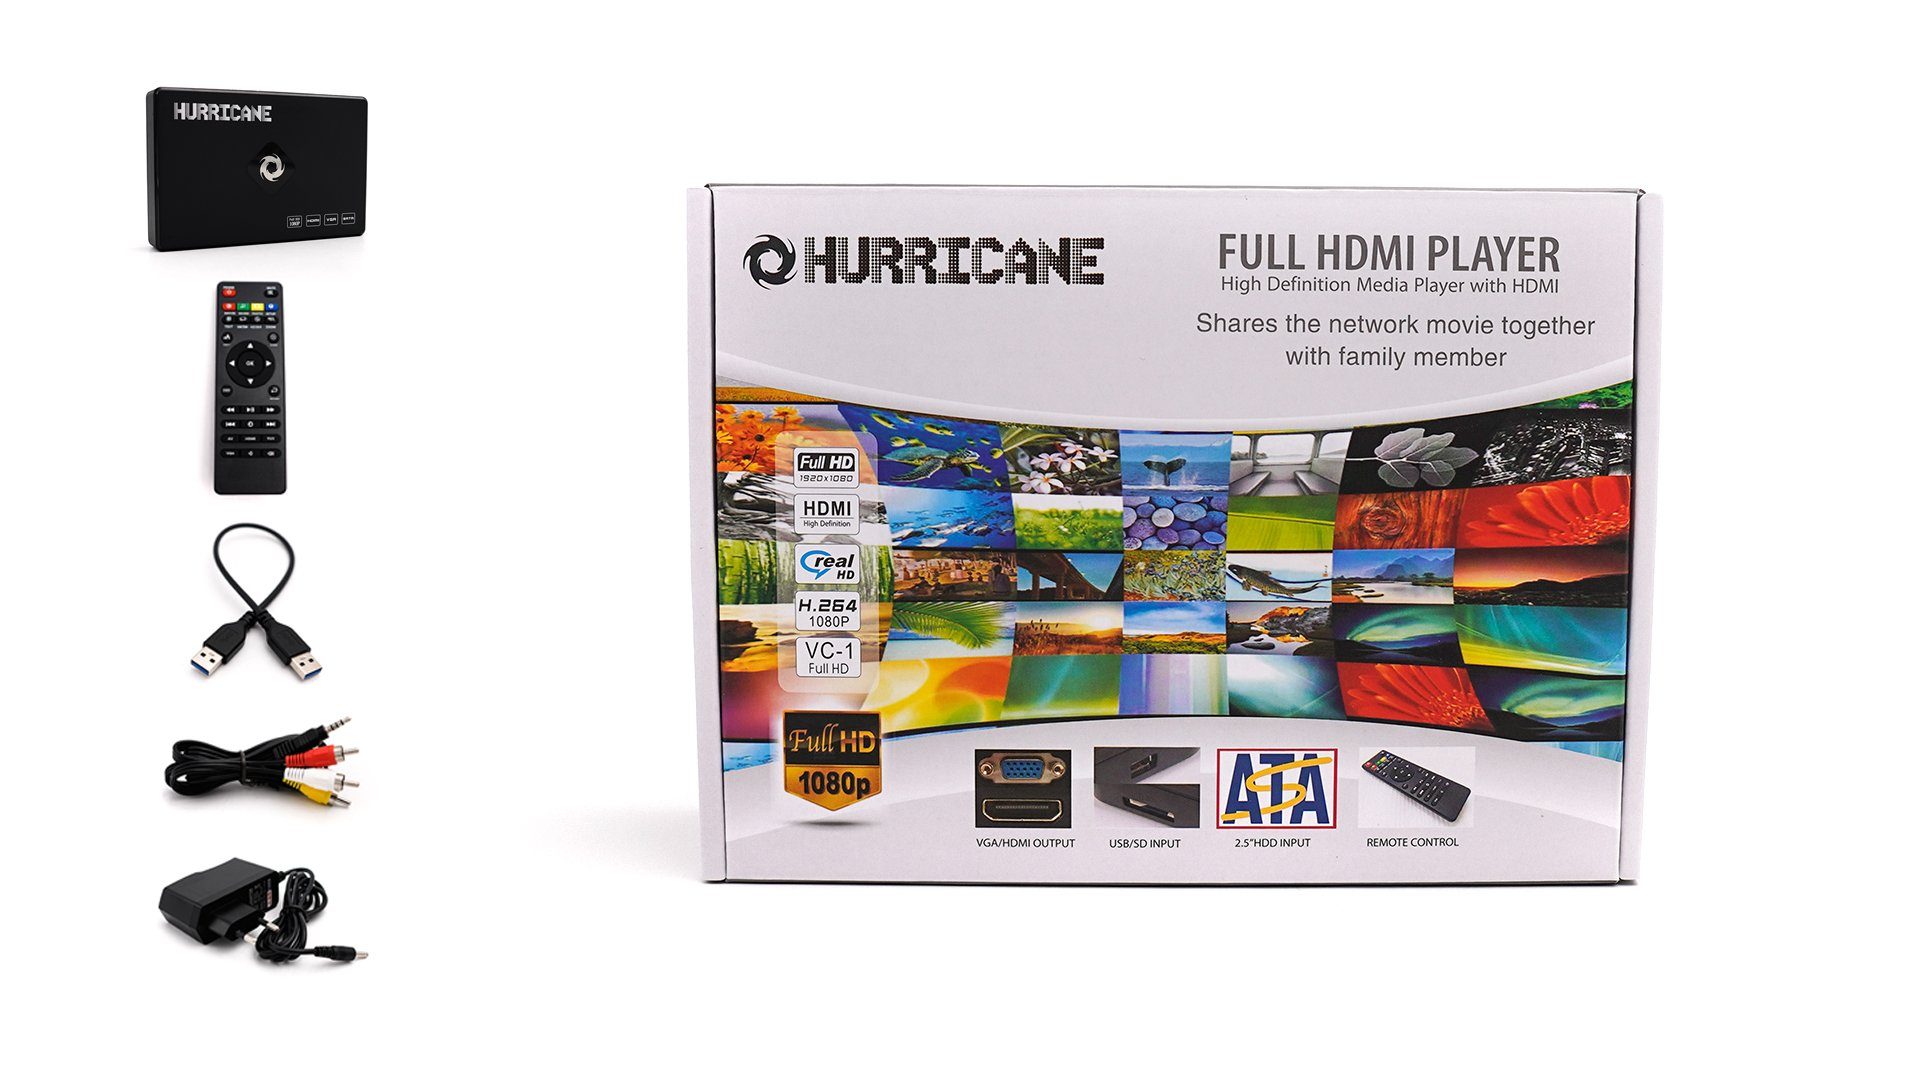 HDMI HD Player HURRICANE (1920*1080) Full Hurricane Streaming-Box M 160GB Aluminium HDD Media